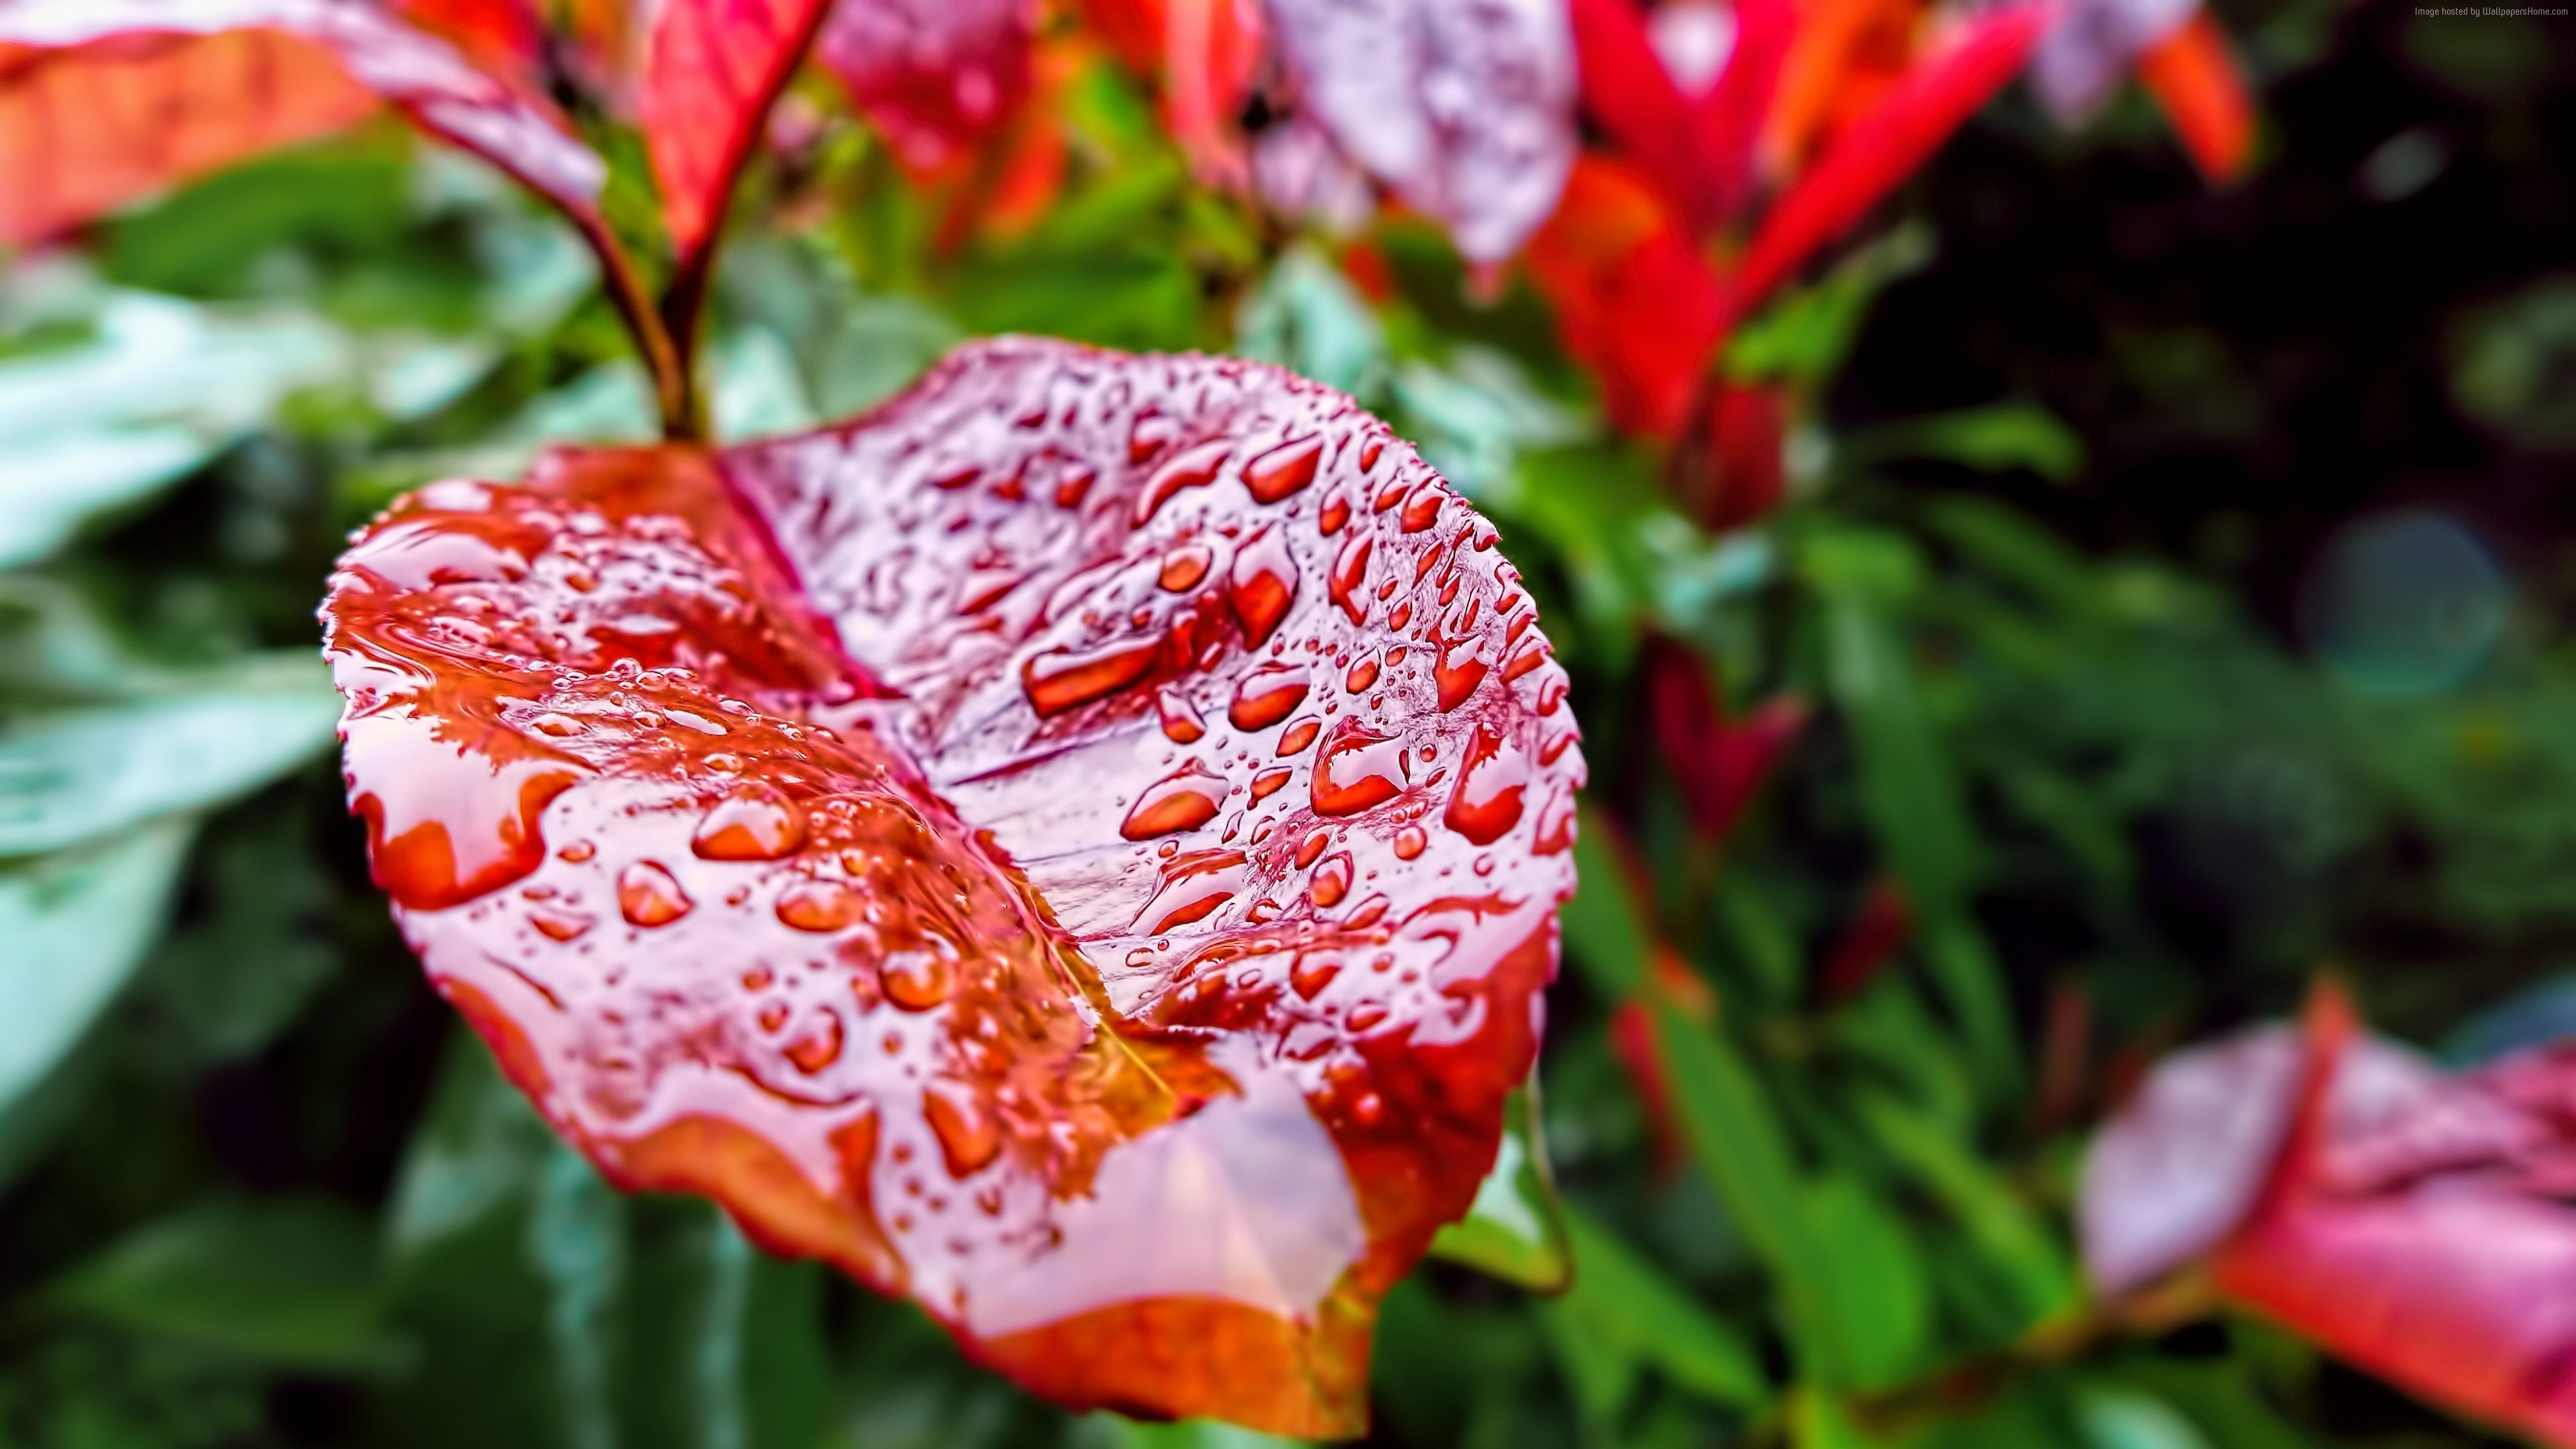 #Leaves, #autumn, #drops, #rain, k wallpaper, k HD Wallpaper